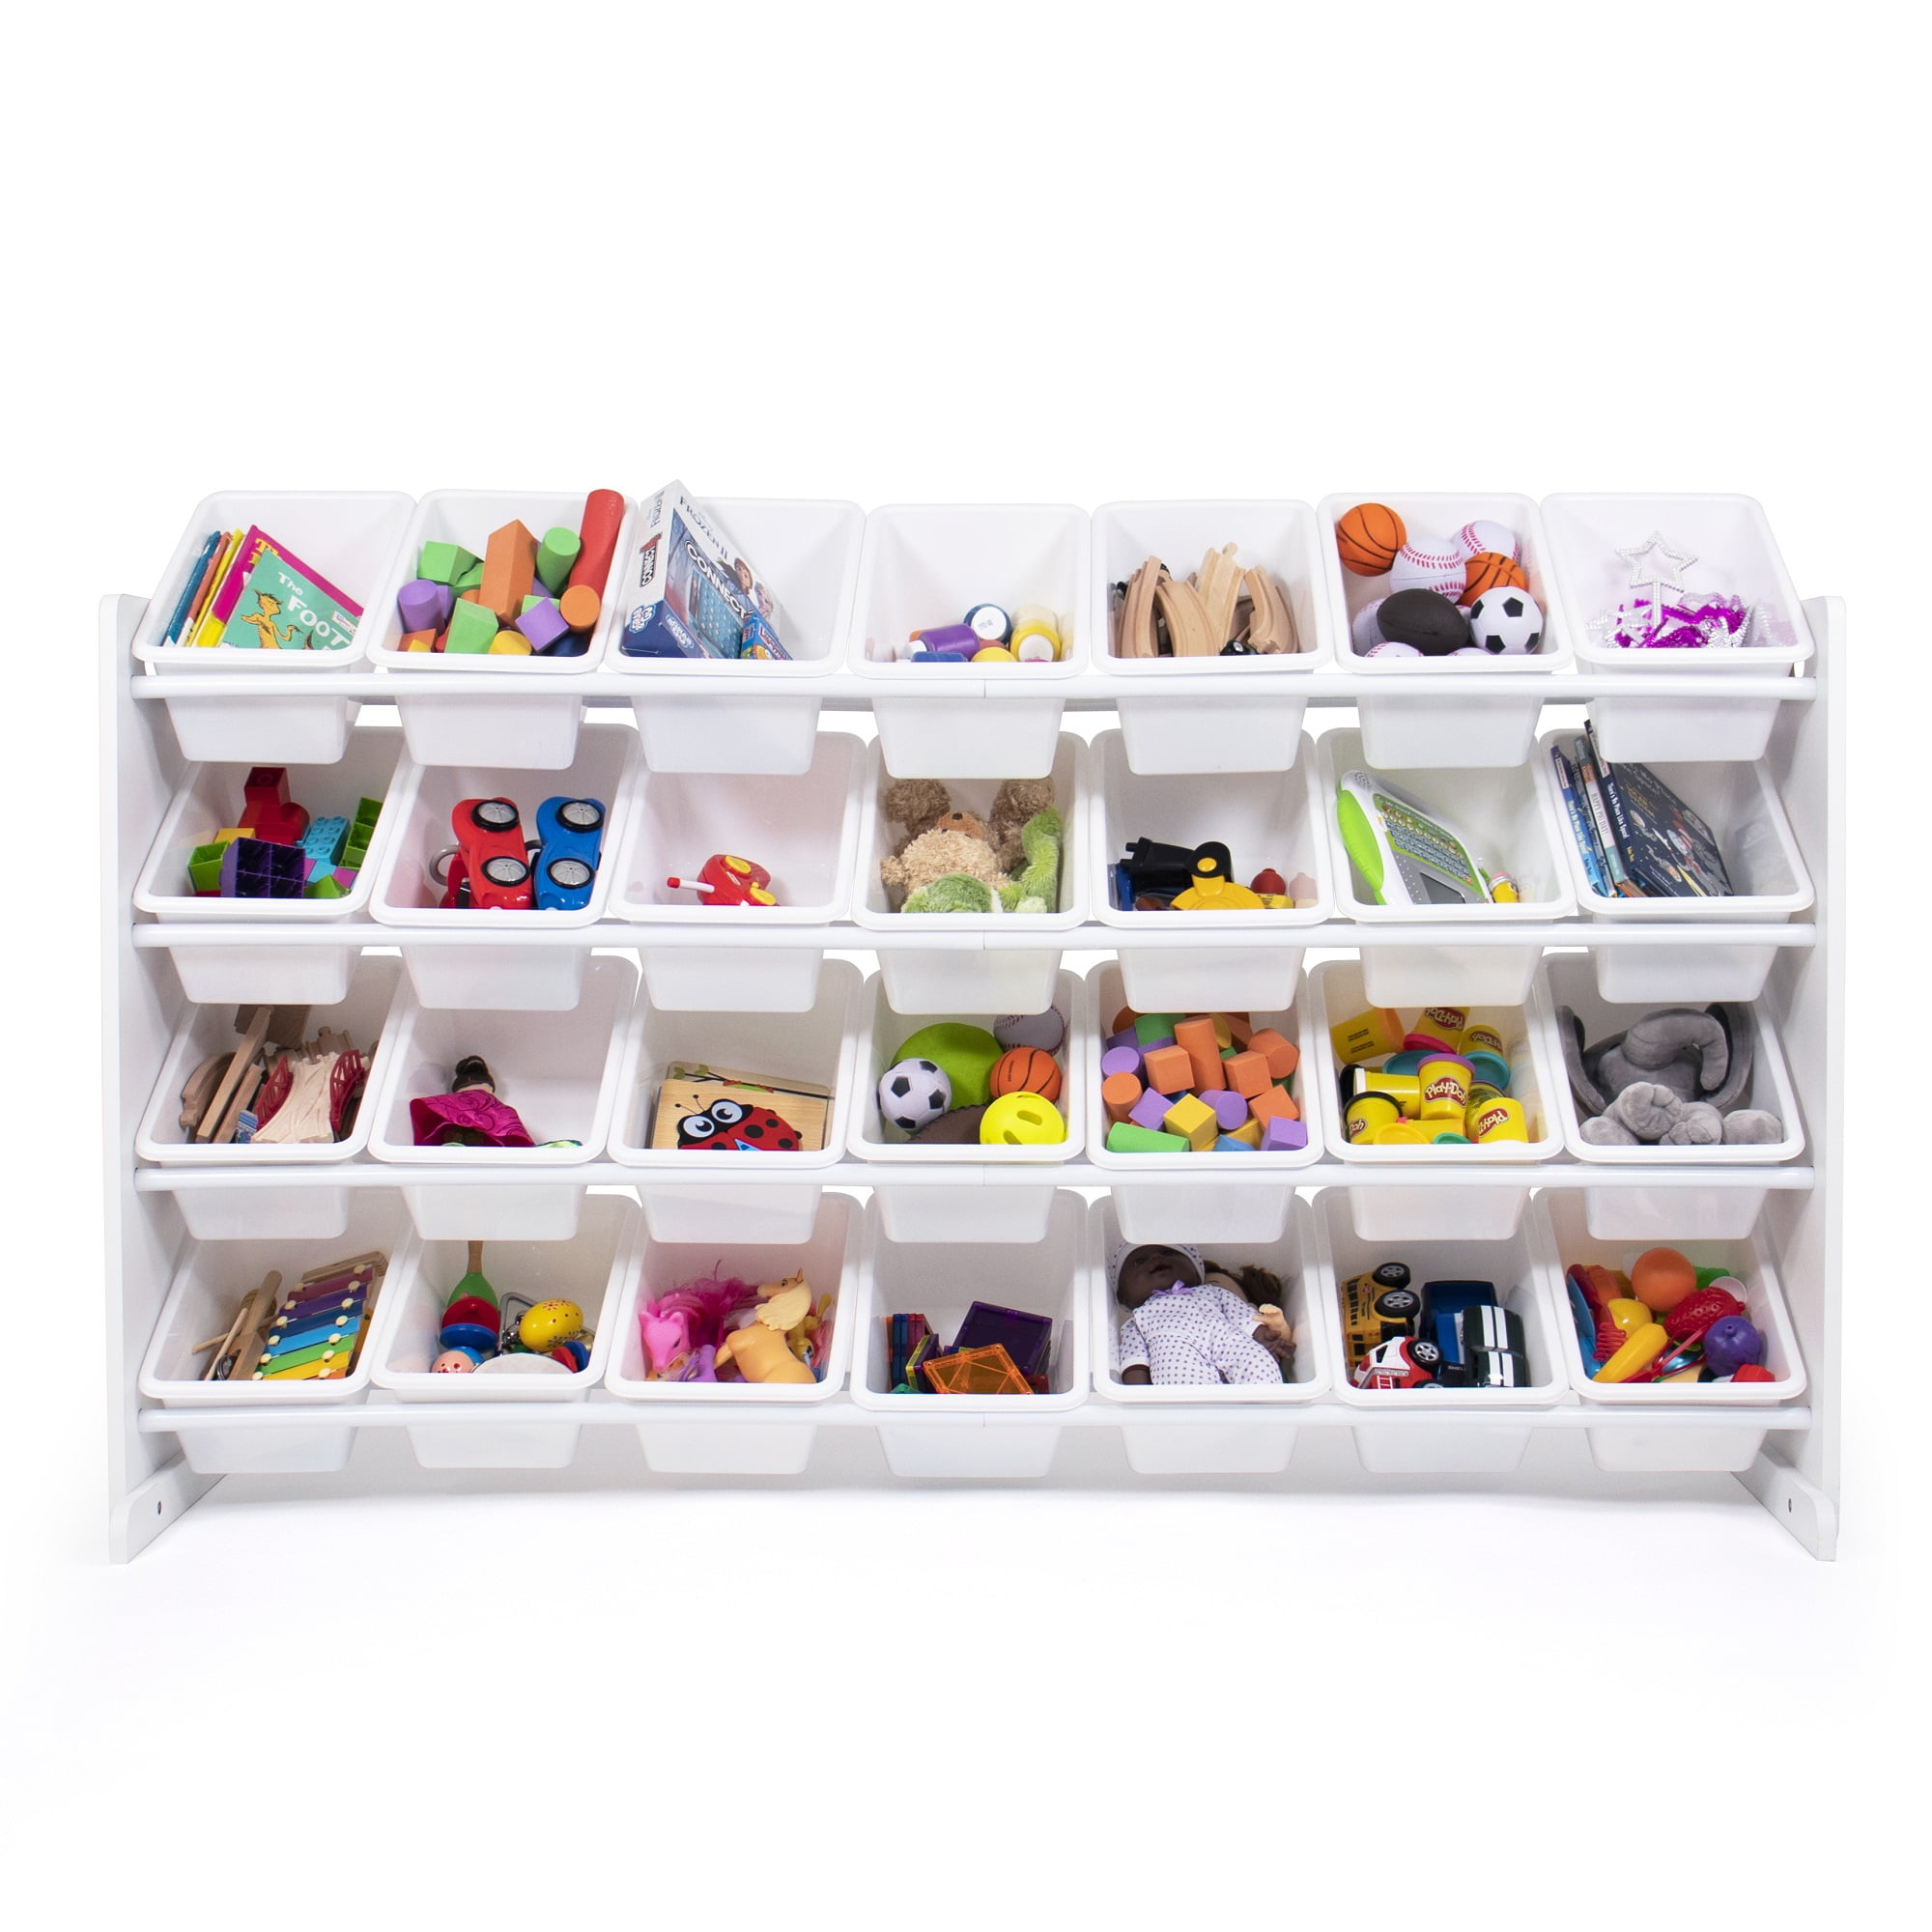 Humble Crew Cambridge Extra Large Toy Storage Organizer with 20 Storage Bins, White